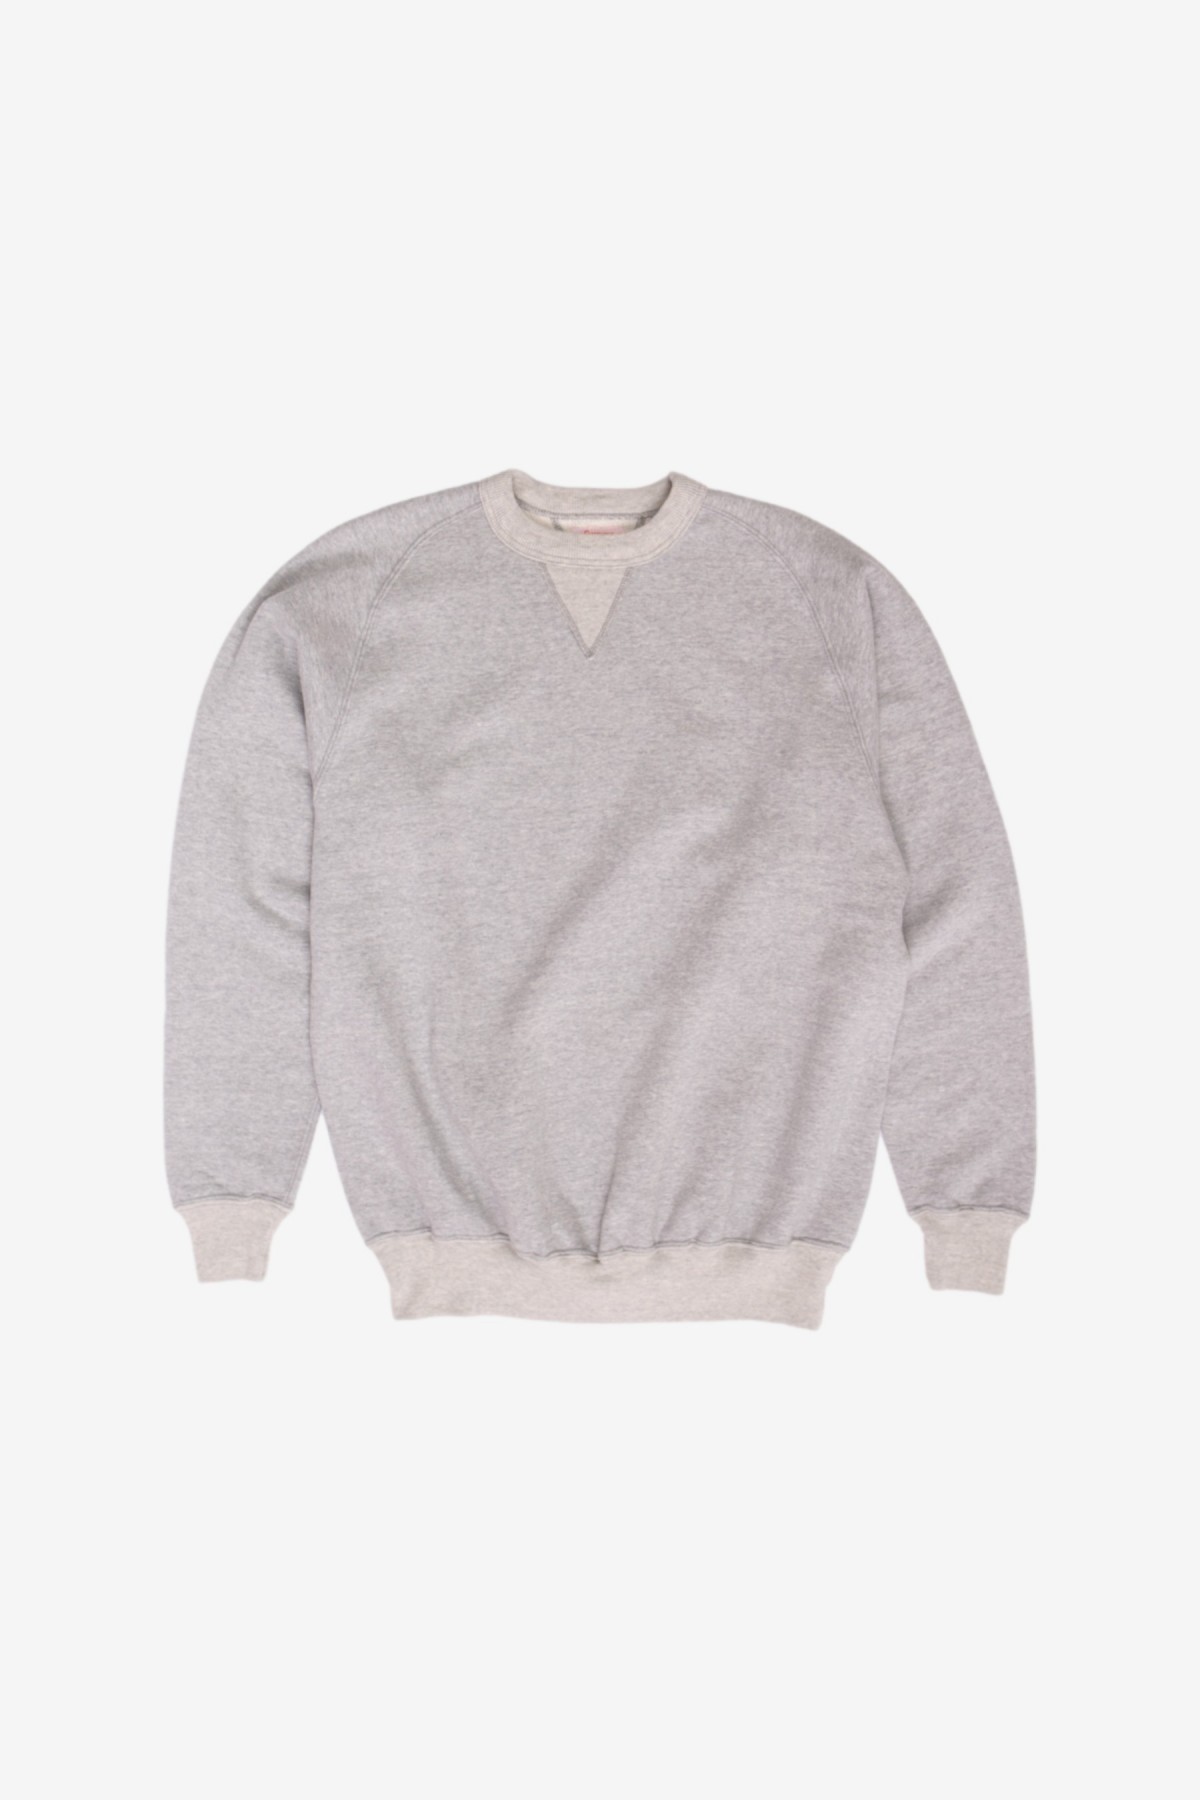 Sunray Sportswear Puamana Crewneck Sweater in Hambledon Grey